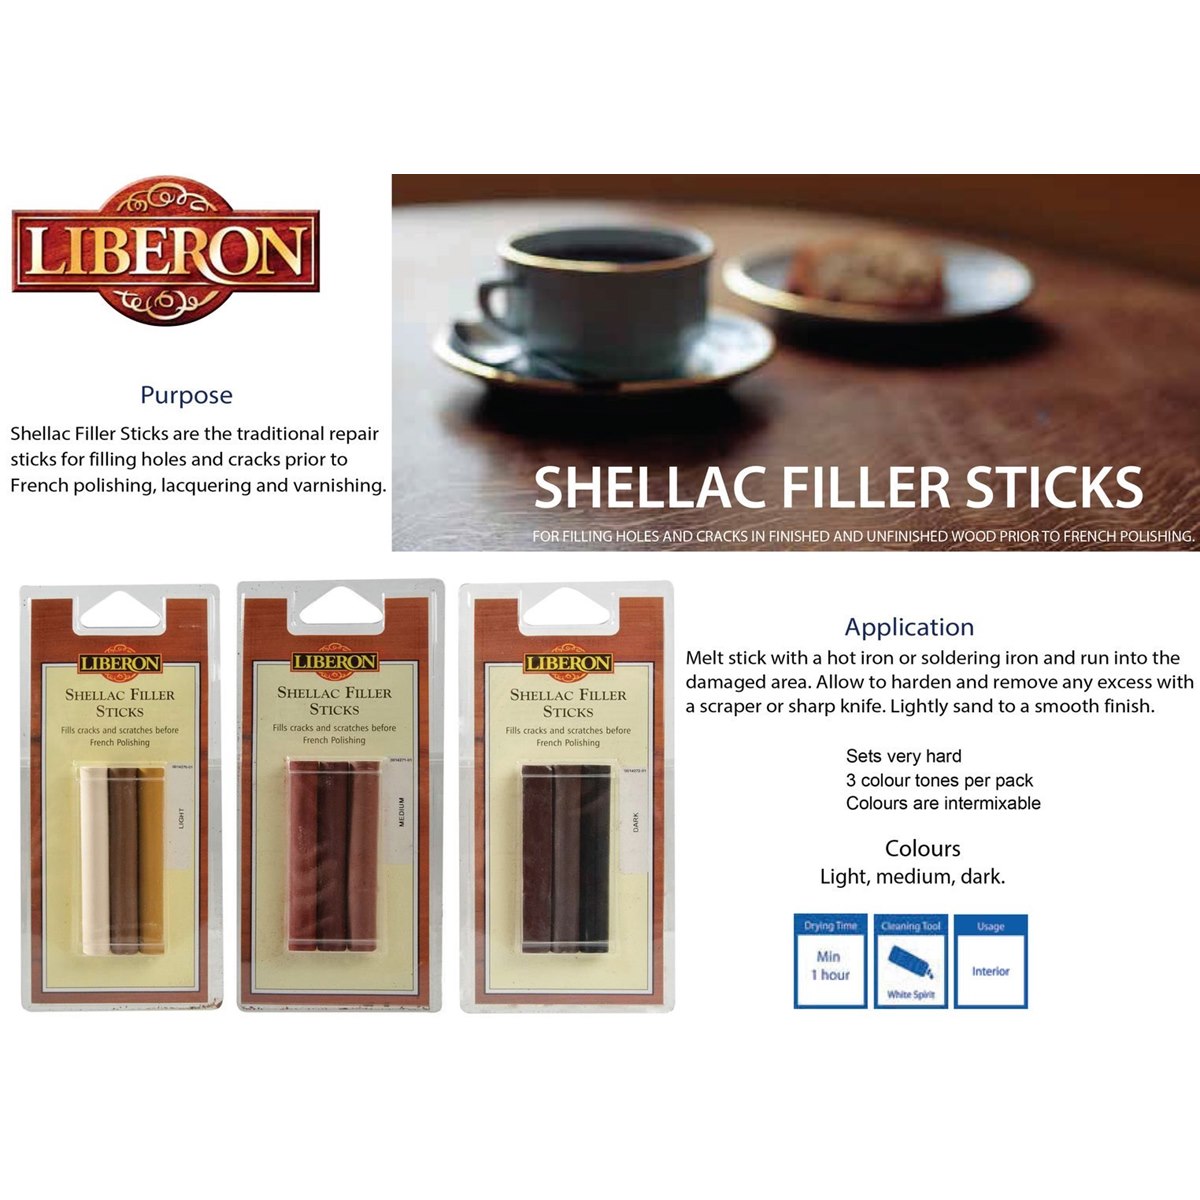 Where to Buy Liberon Shellac Filler Sticks